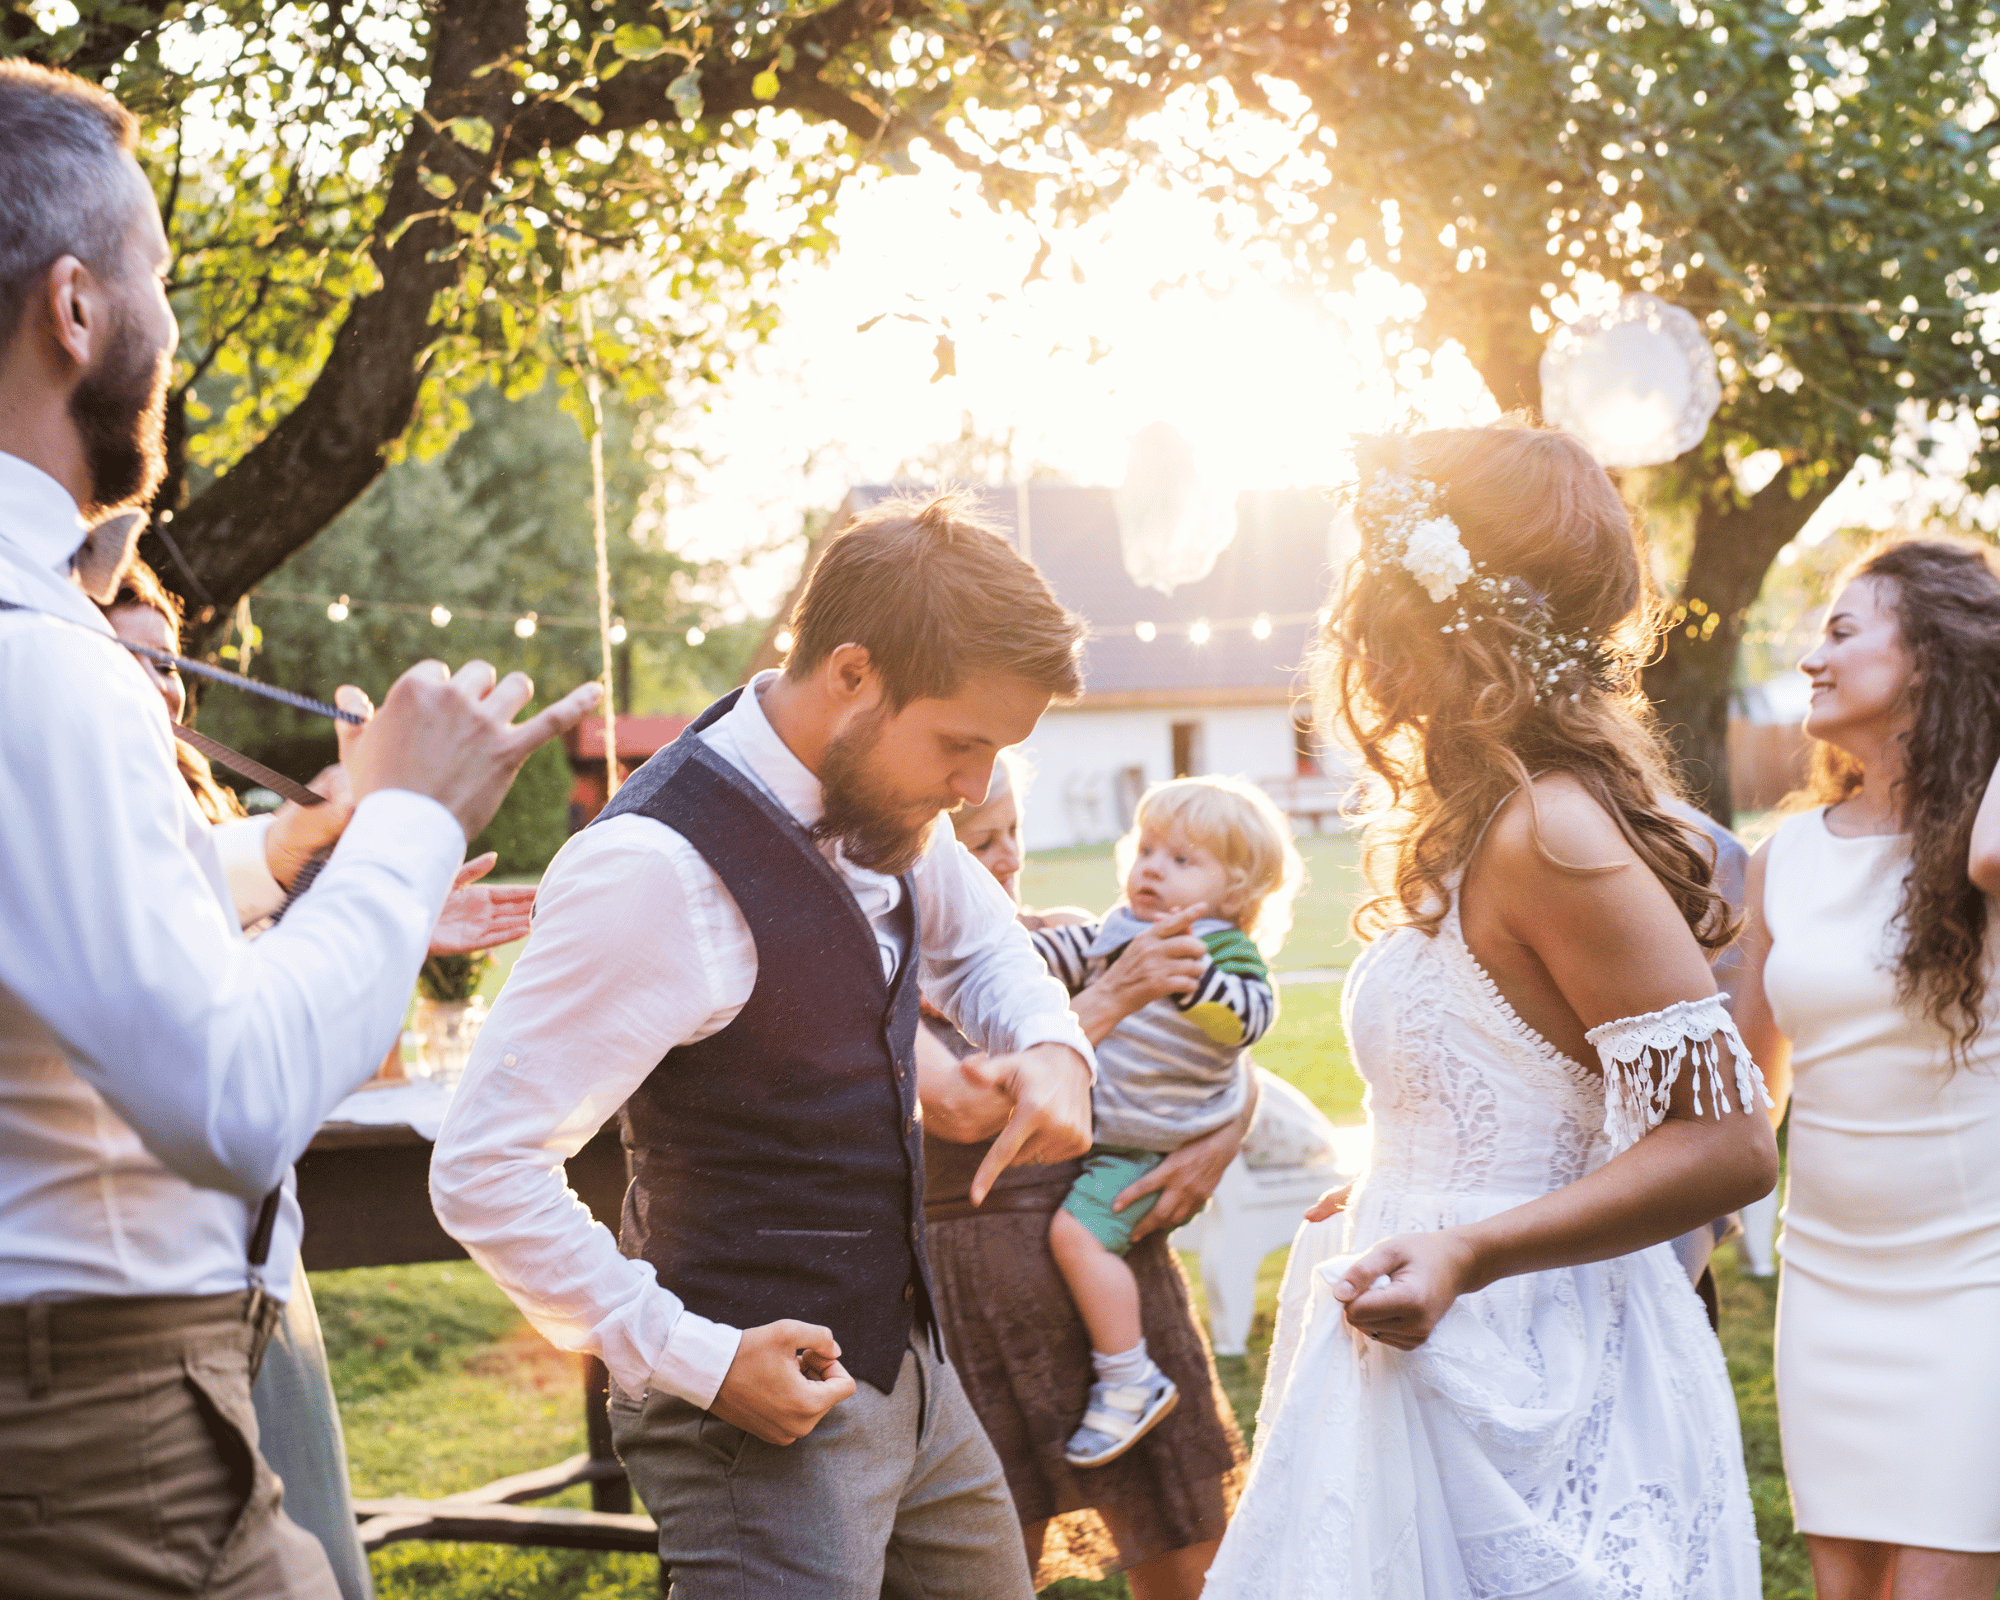 How to Plan an Incredible Backyard Wedding